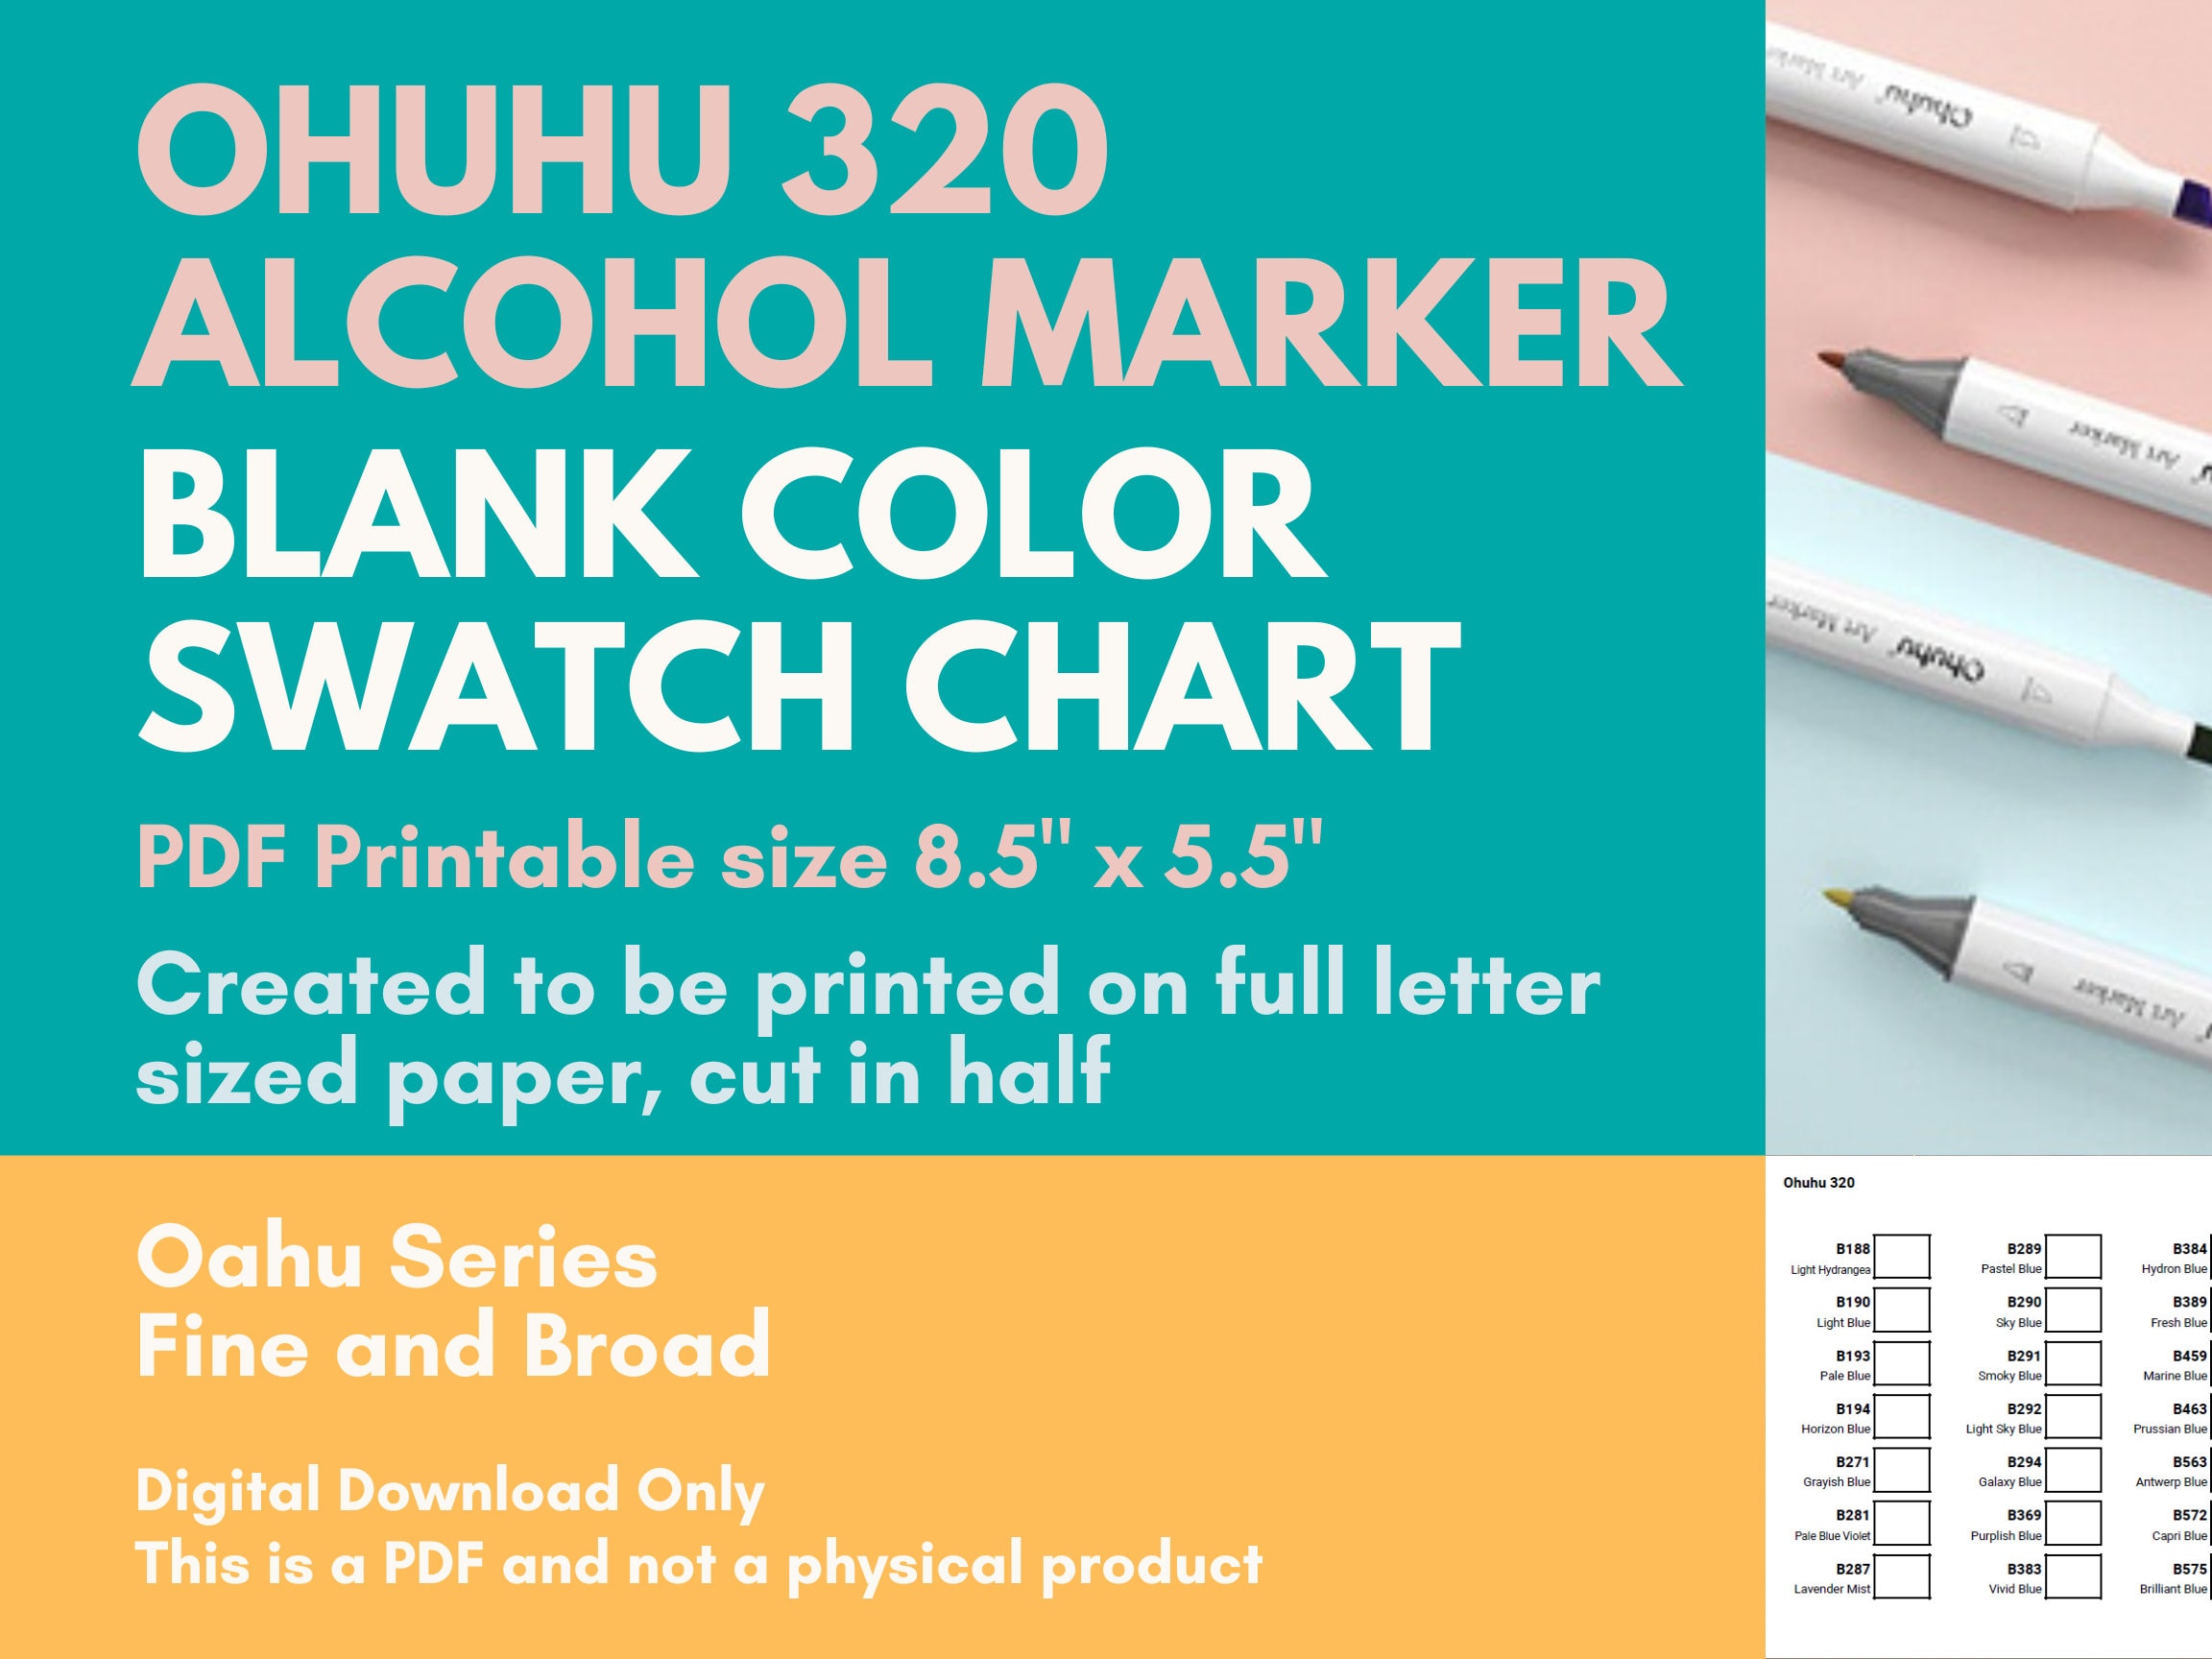 Ohuhu 216 Honolulu Marker Set - Better Swatch Order Part 1 